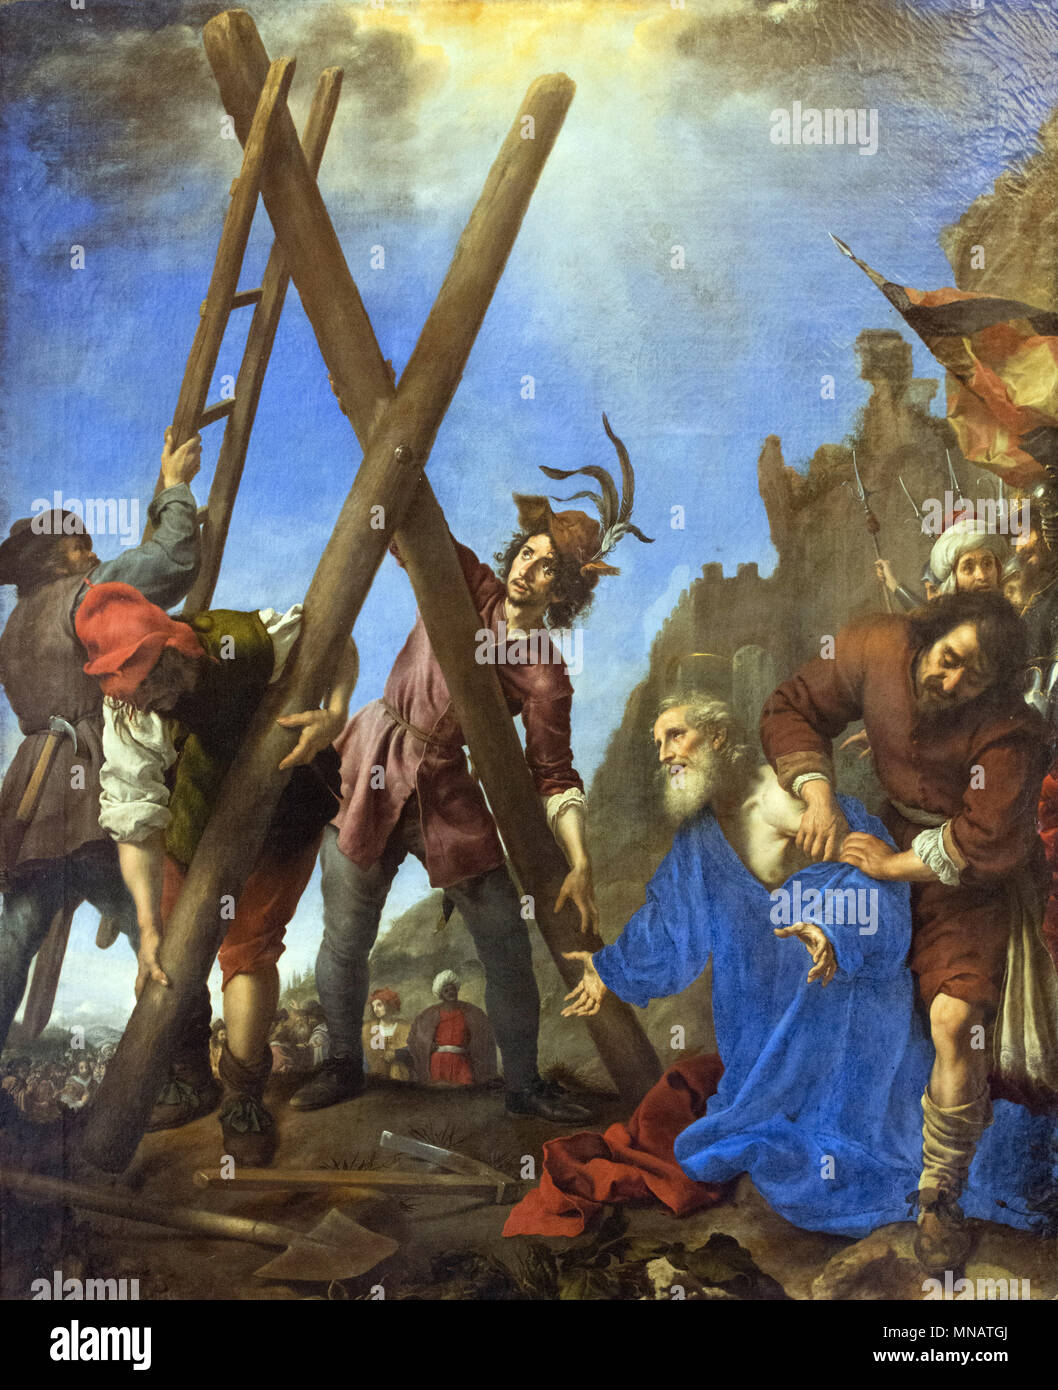 Carlo Dolci - Saint Andrew vor dem Kreuz aus dem 17. Jahrhundert - Galerie Palatina - Galerie Pitti Palace Florenz Italien Stockfoto